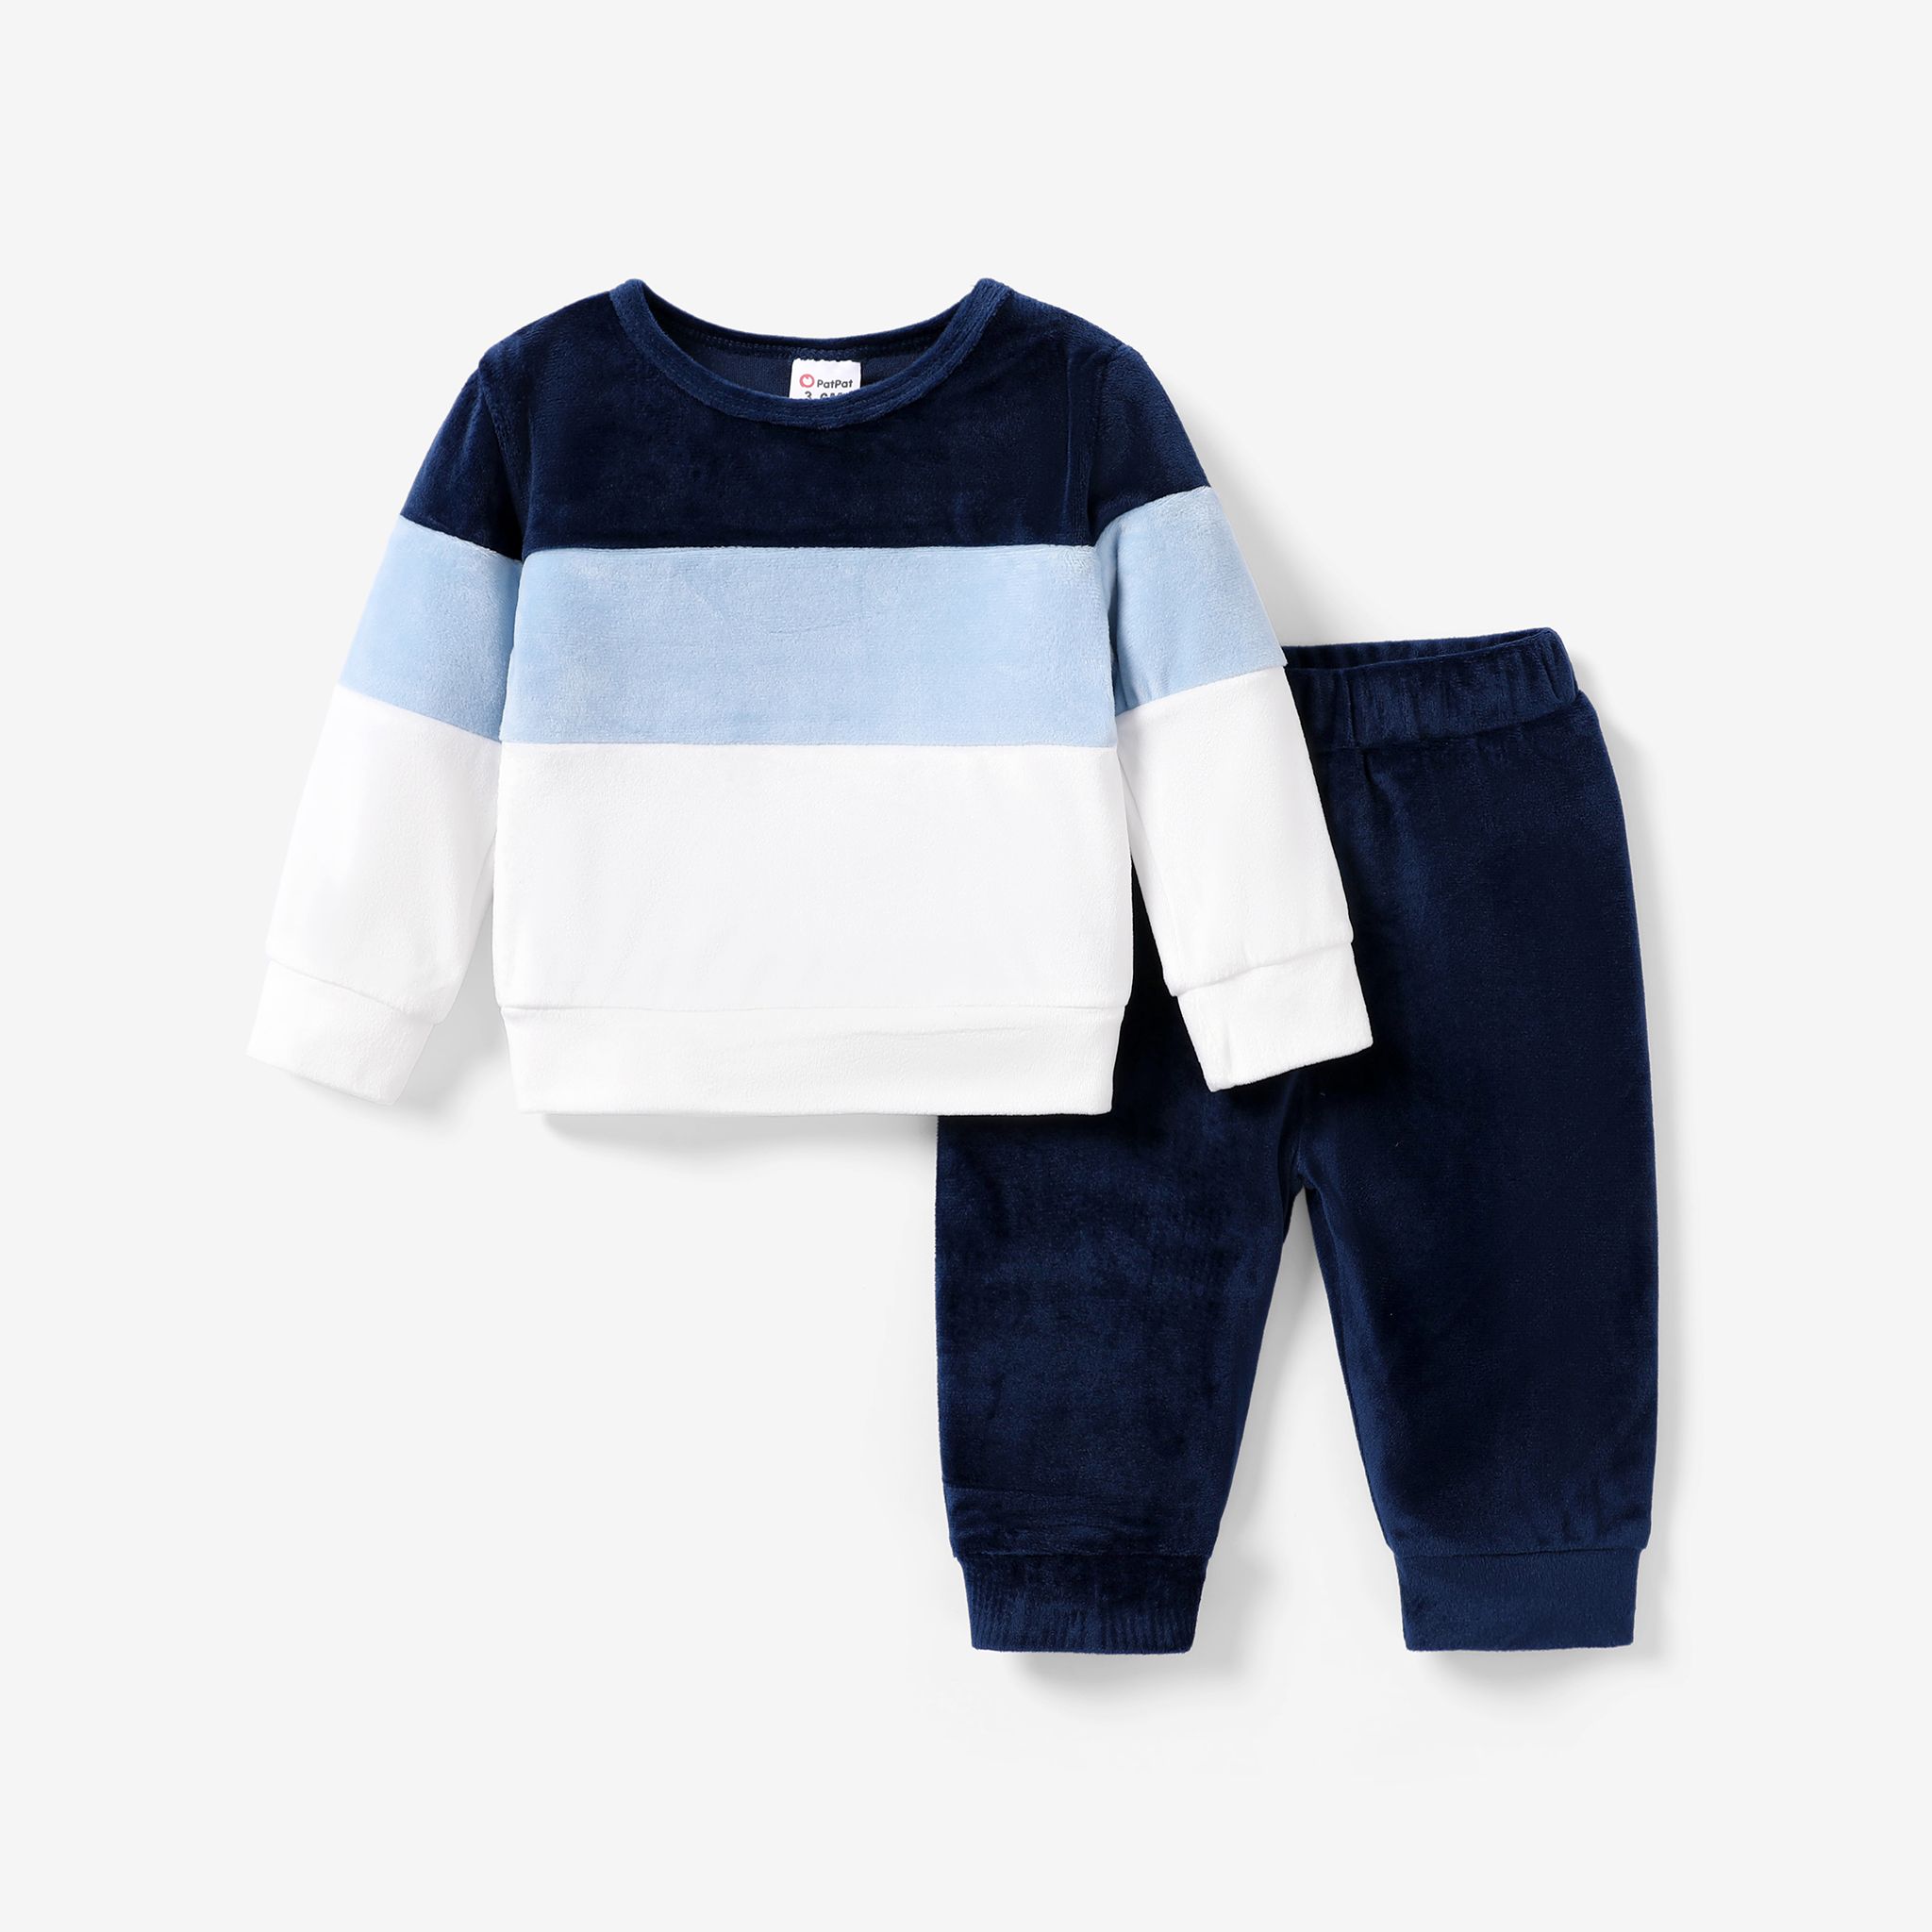 2pcs Baby/Toddler Boy Solid Colorful Patchwork Design Set